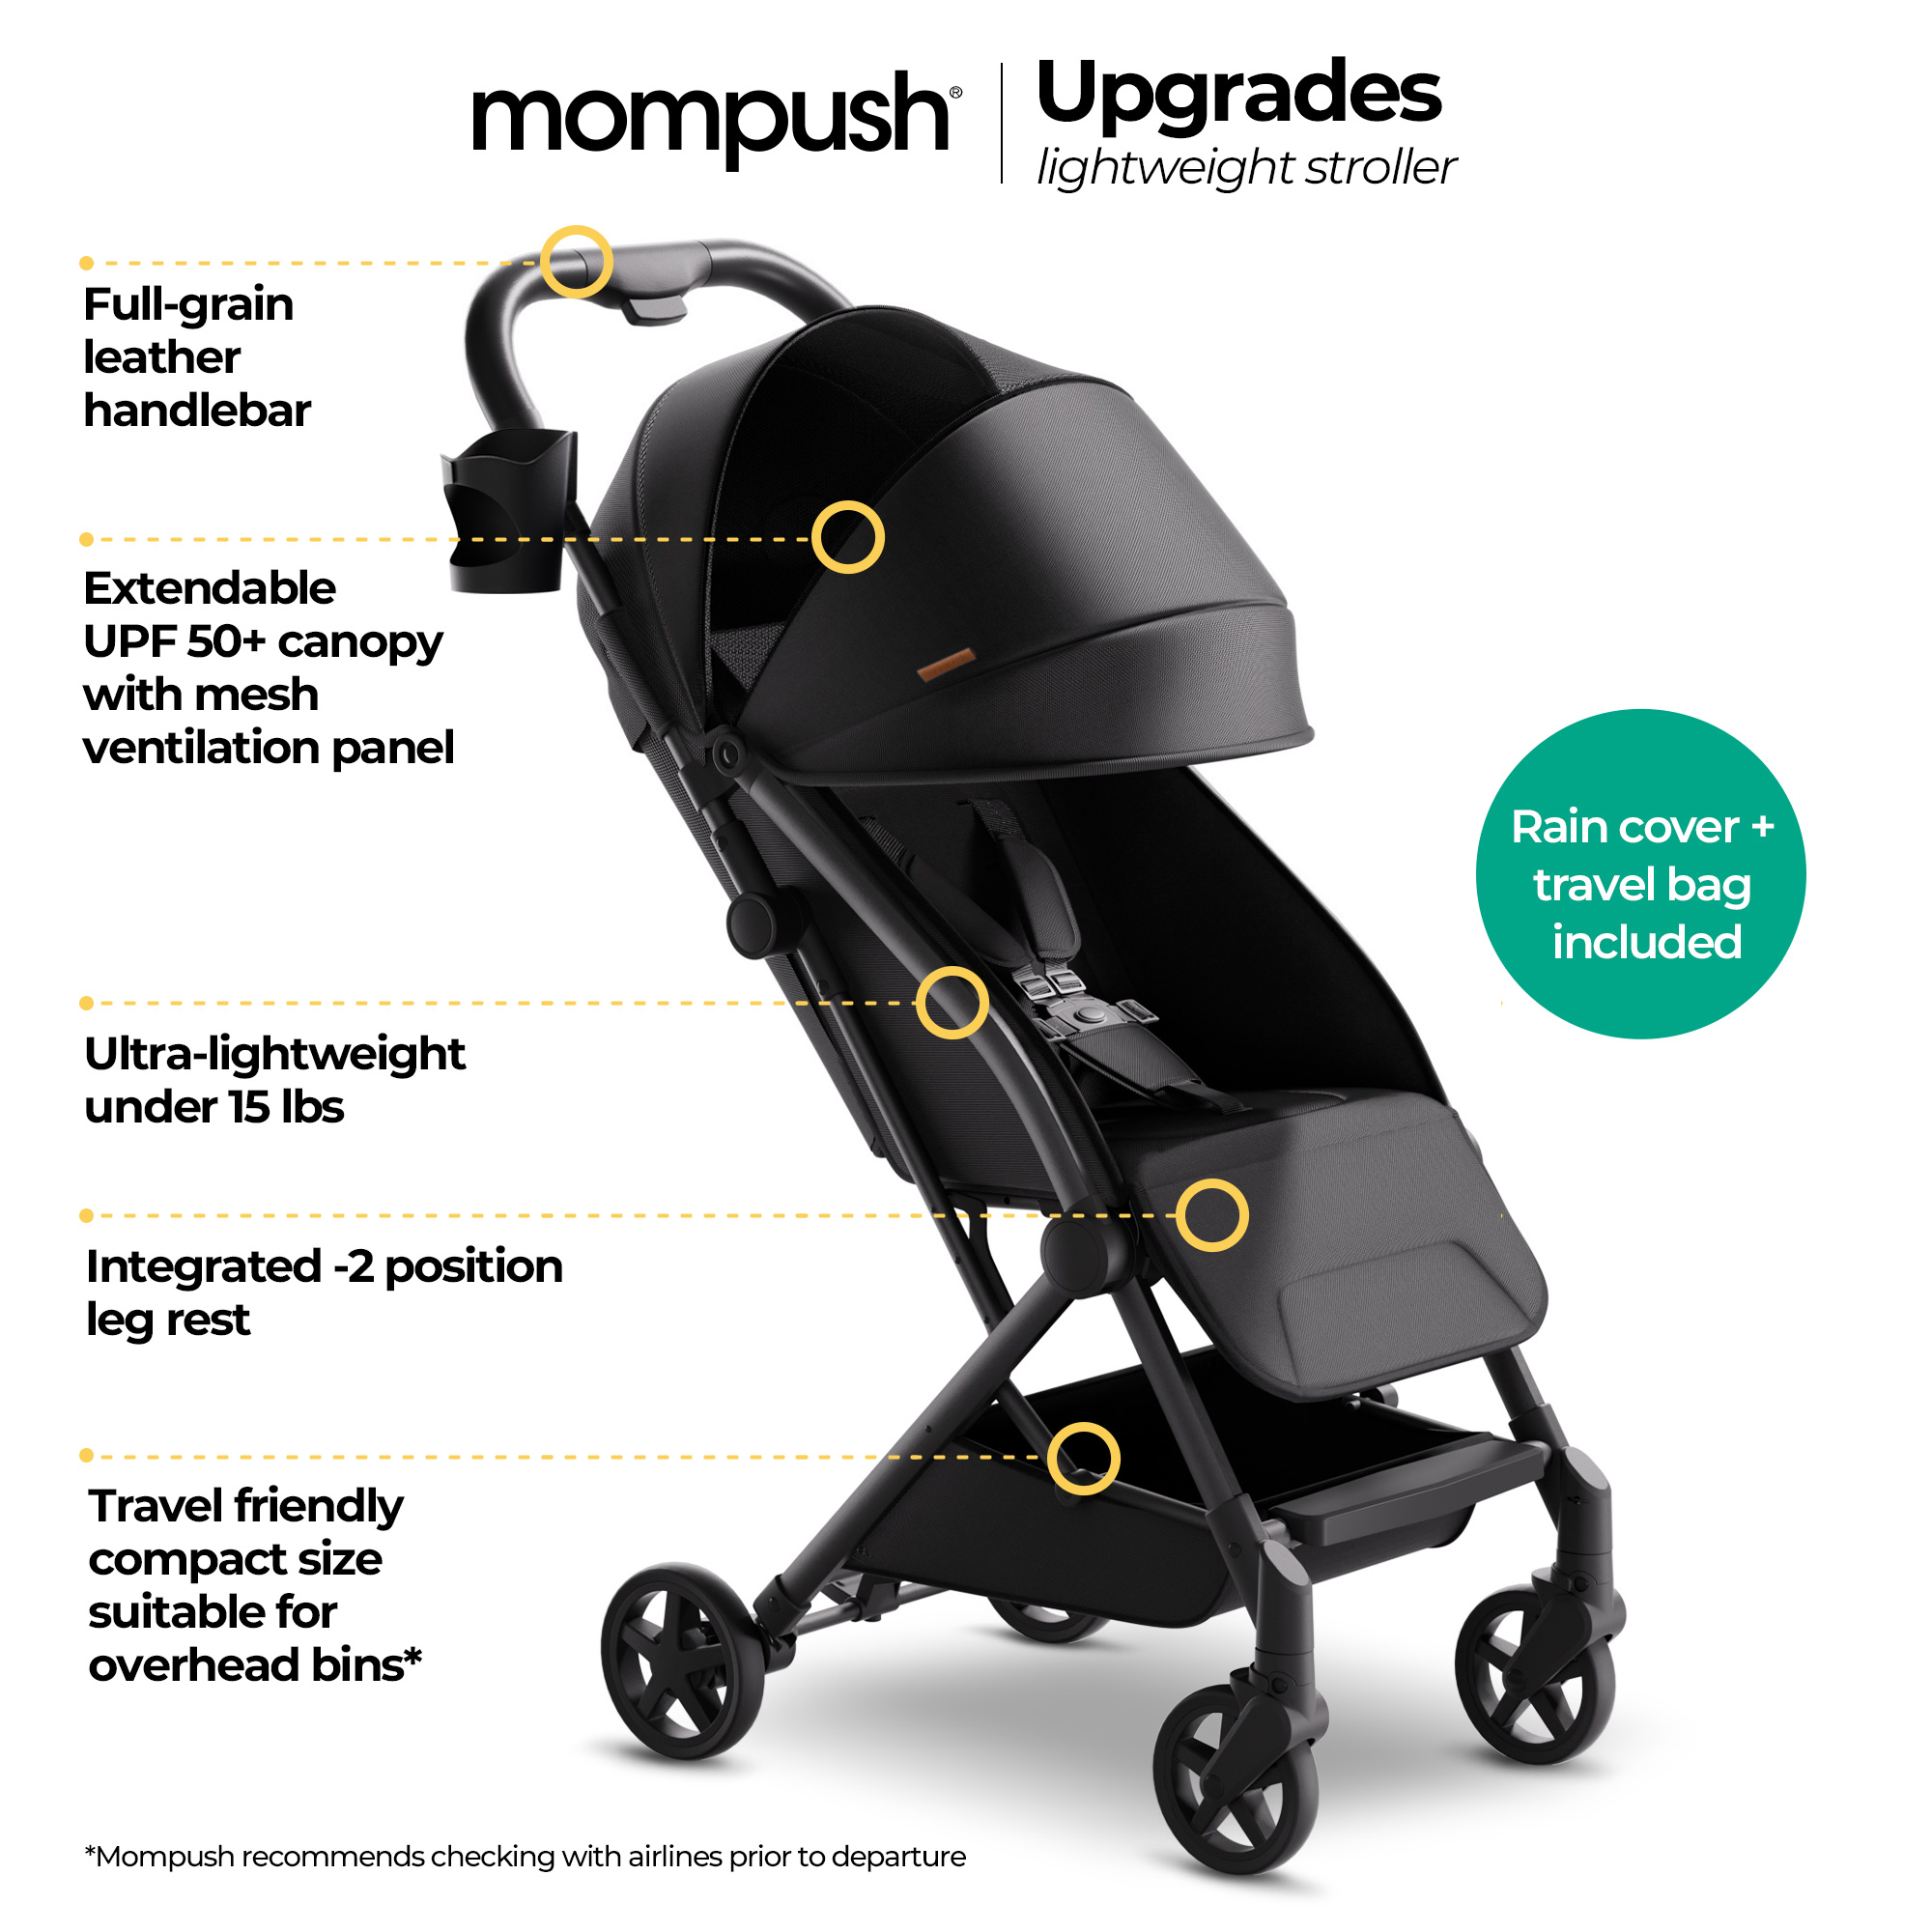 Mompush Lightweight Baby Stroller, Compact Stroller for Airplane Travel, Black, 14.2 lb, Unisex - image 4 of 11